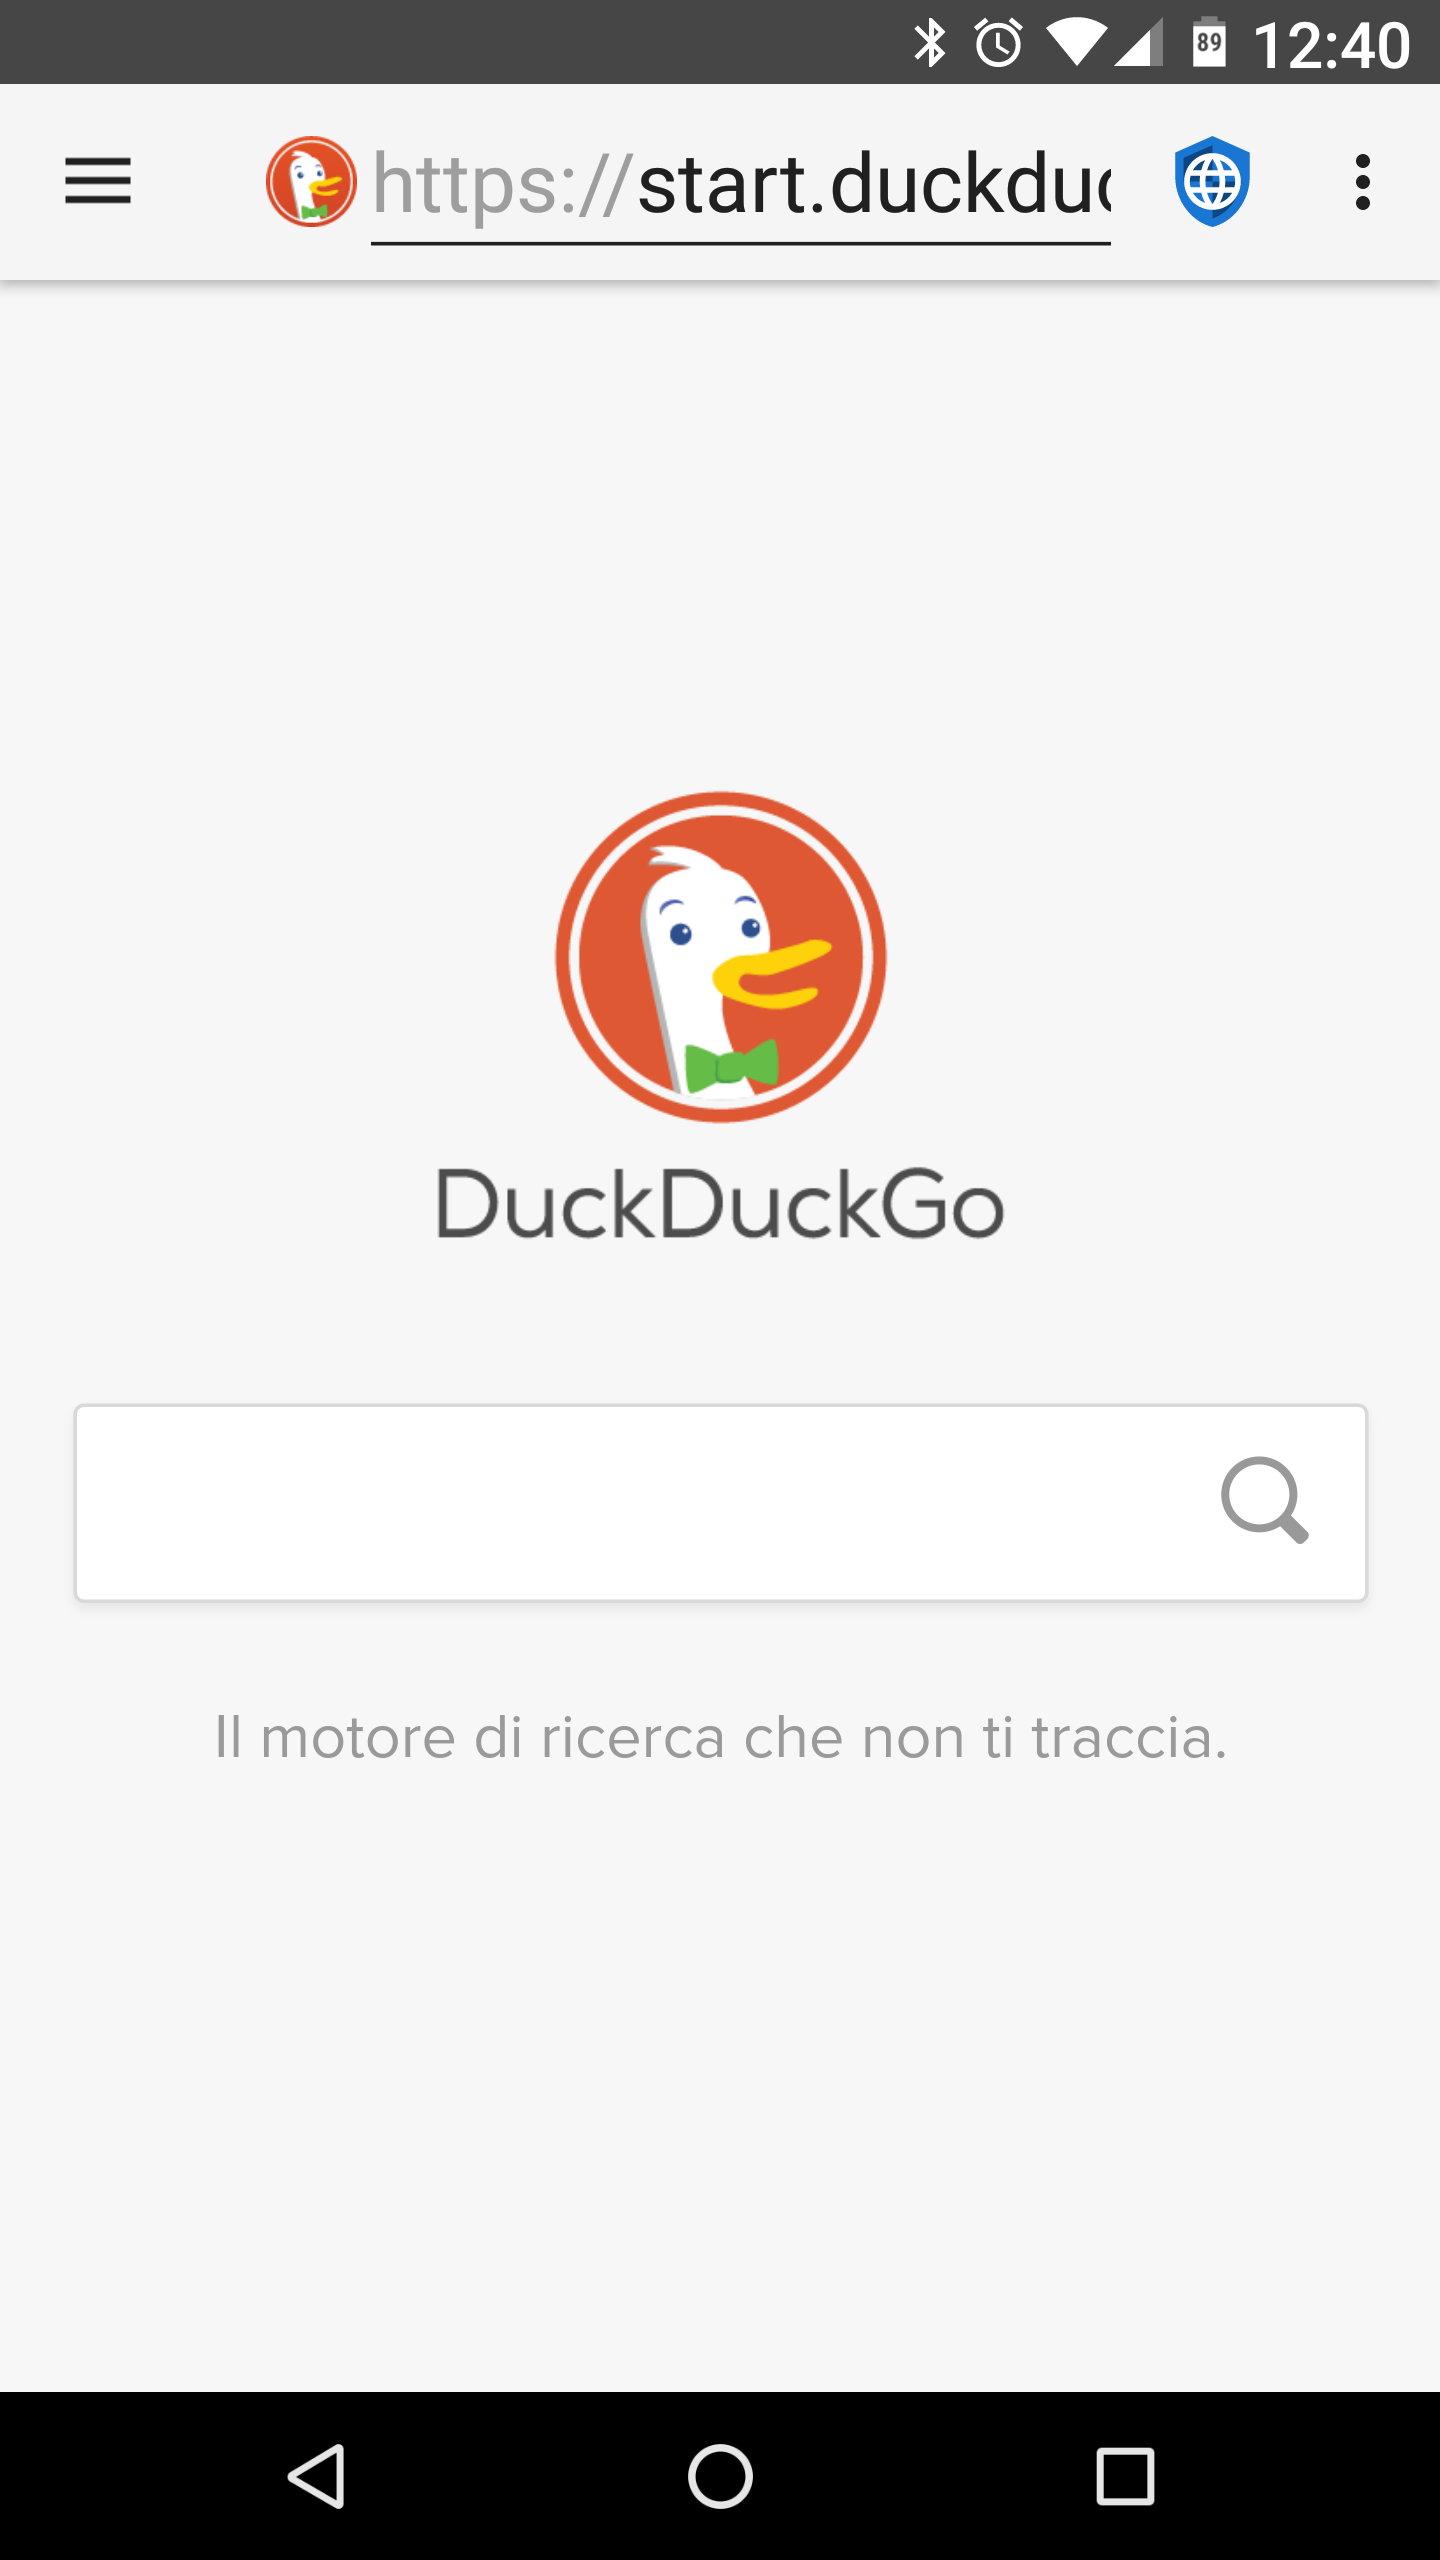 fastlane/metadata/android/it-IT/images/phoneScreenshots/01-DuckDuckGo.png